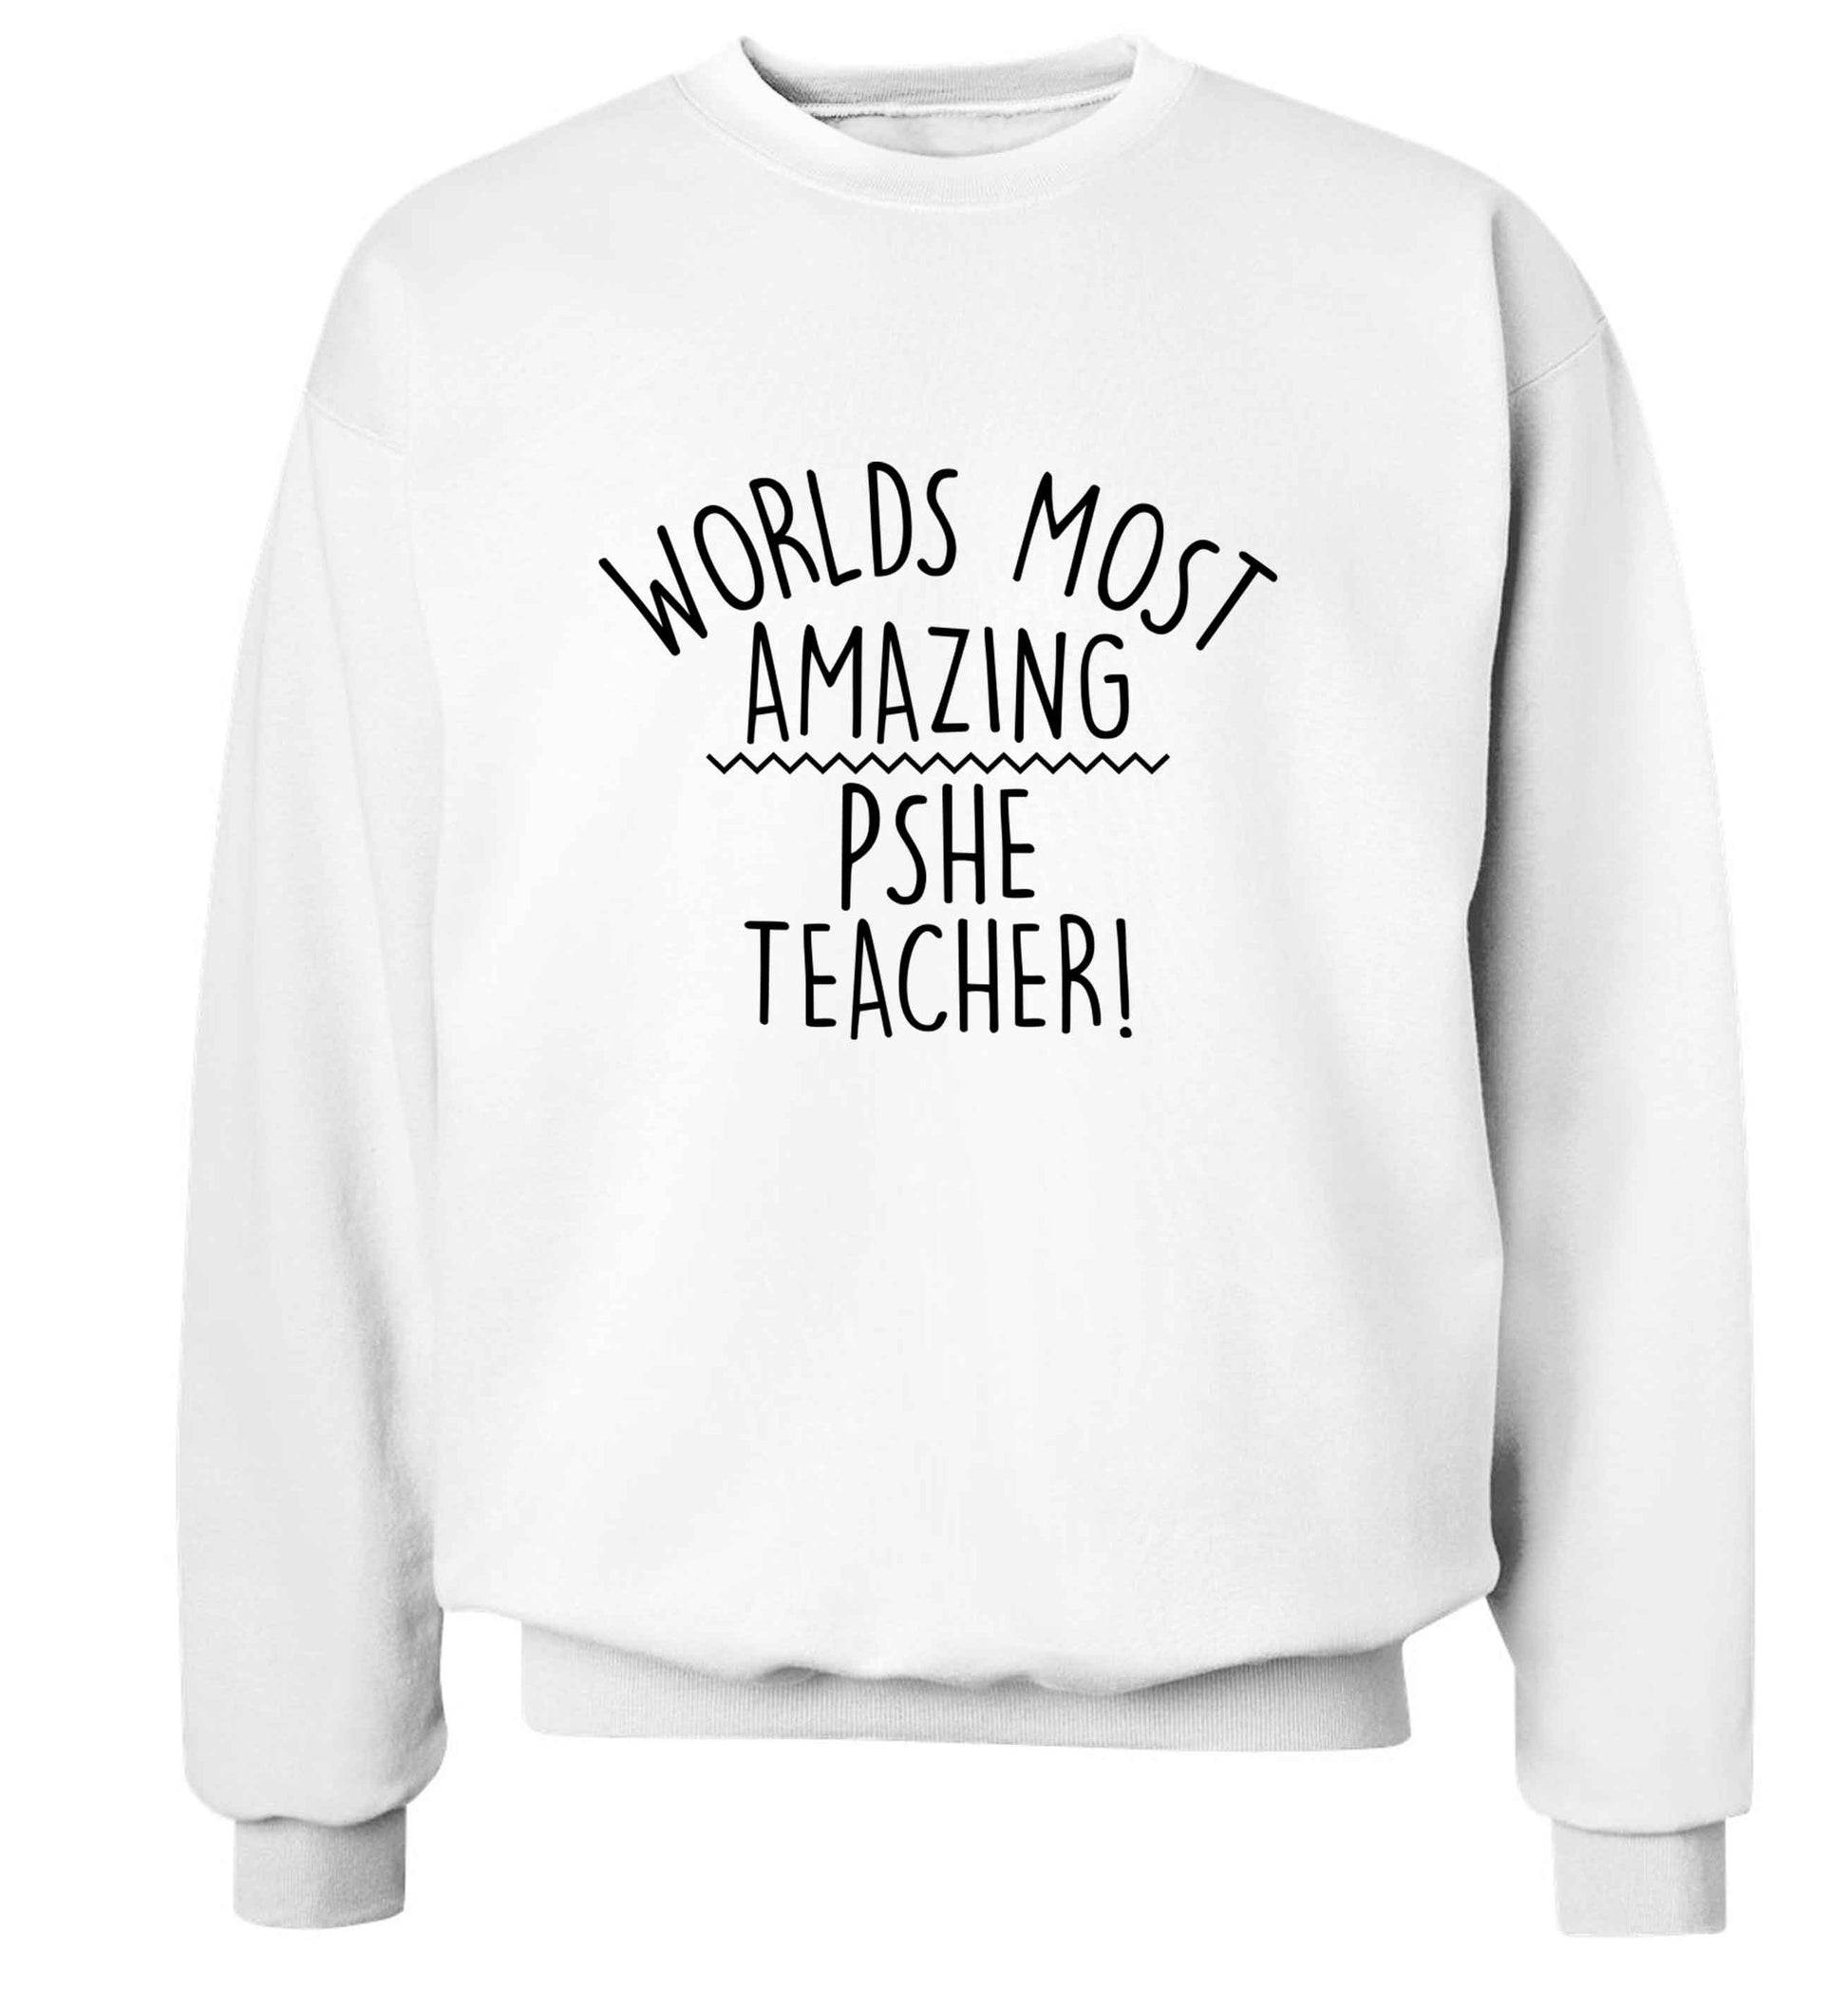 Worlds most amazing PHSE teacher adult's unisex white sweater 2XL